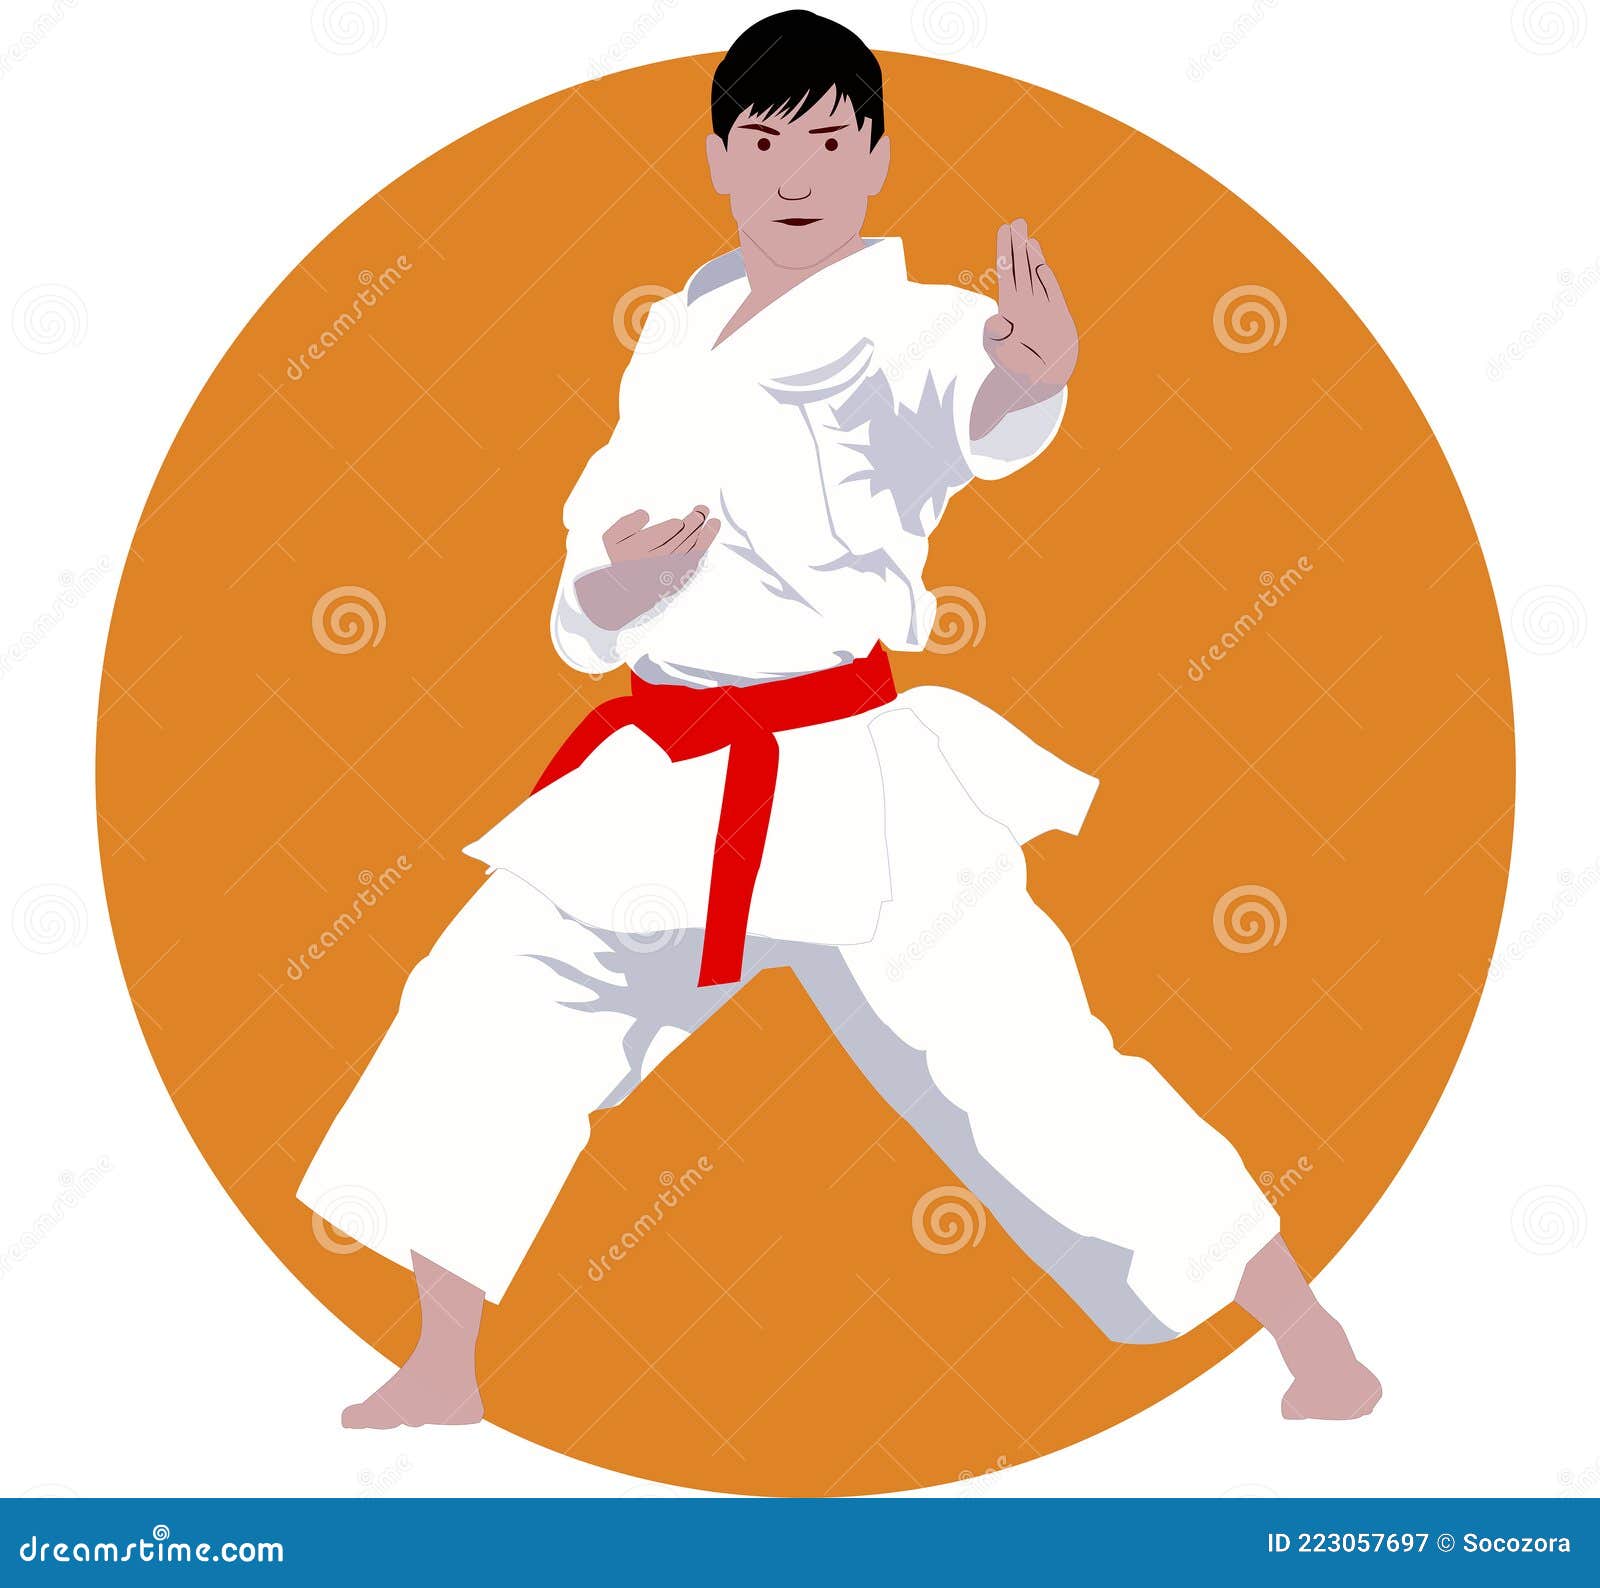 Karate olympics 2021